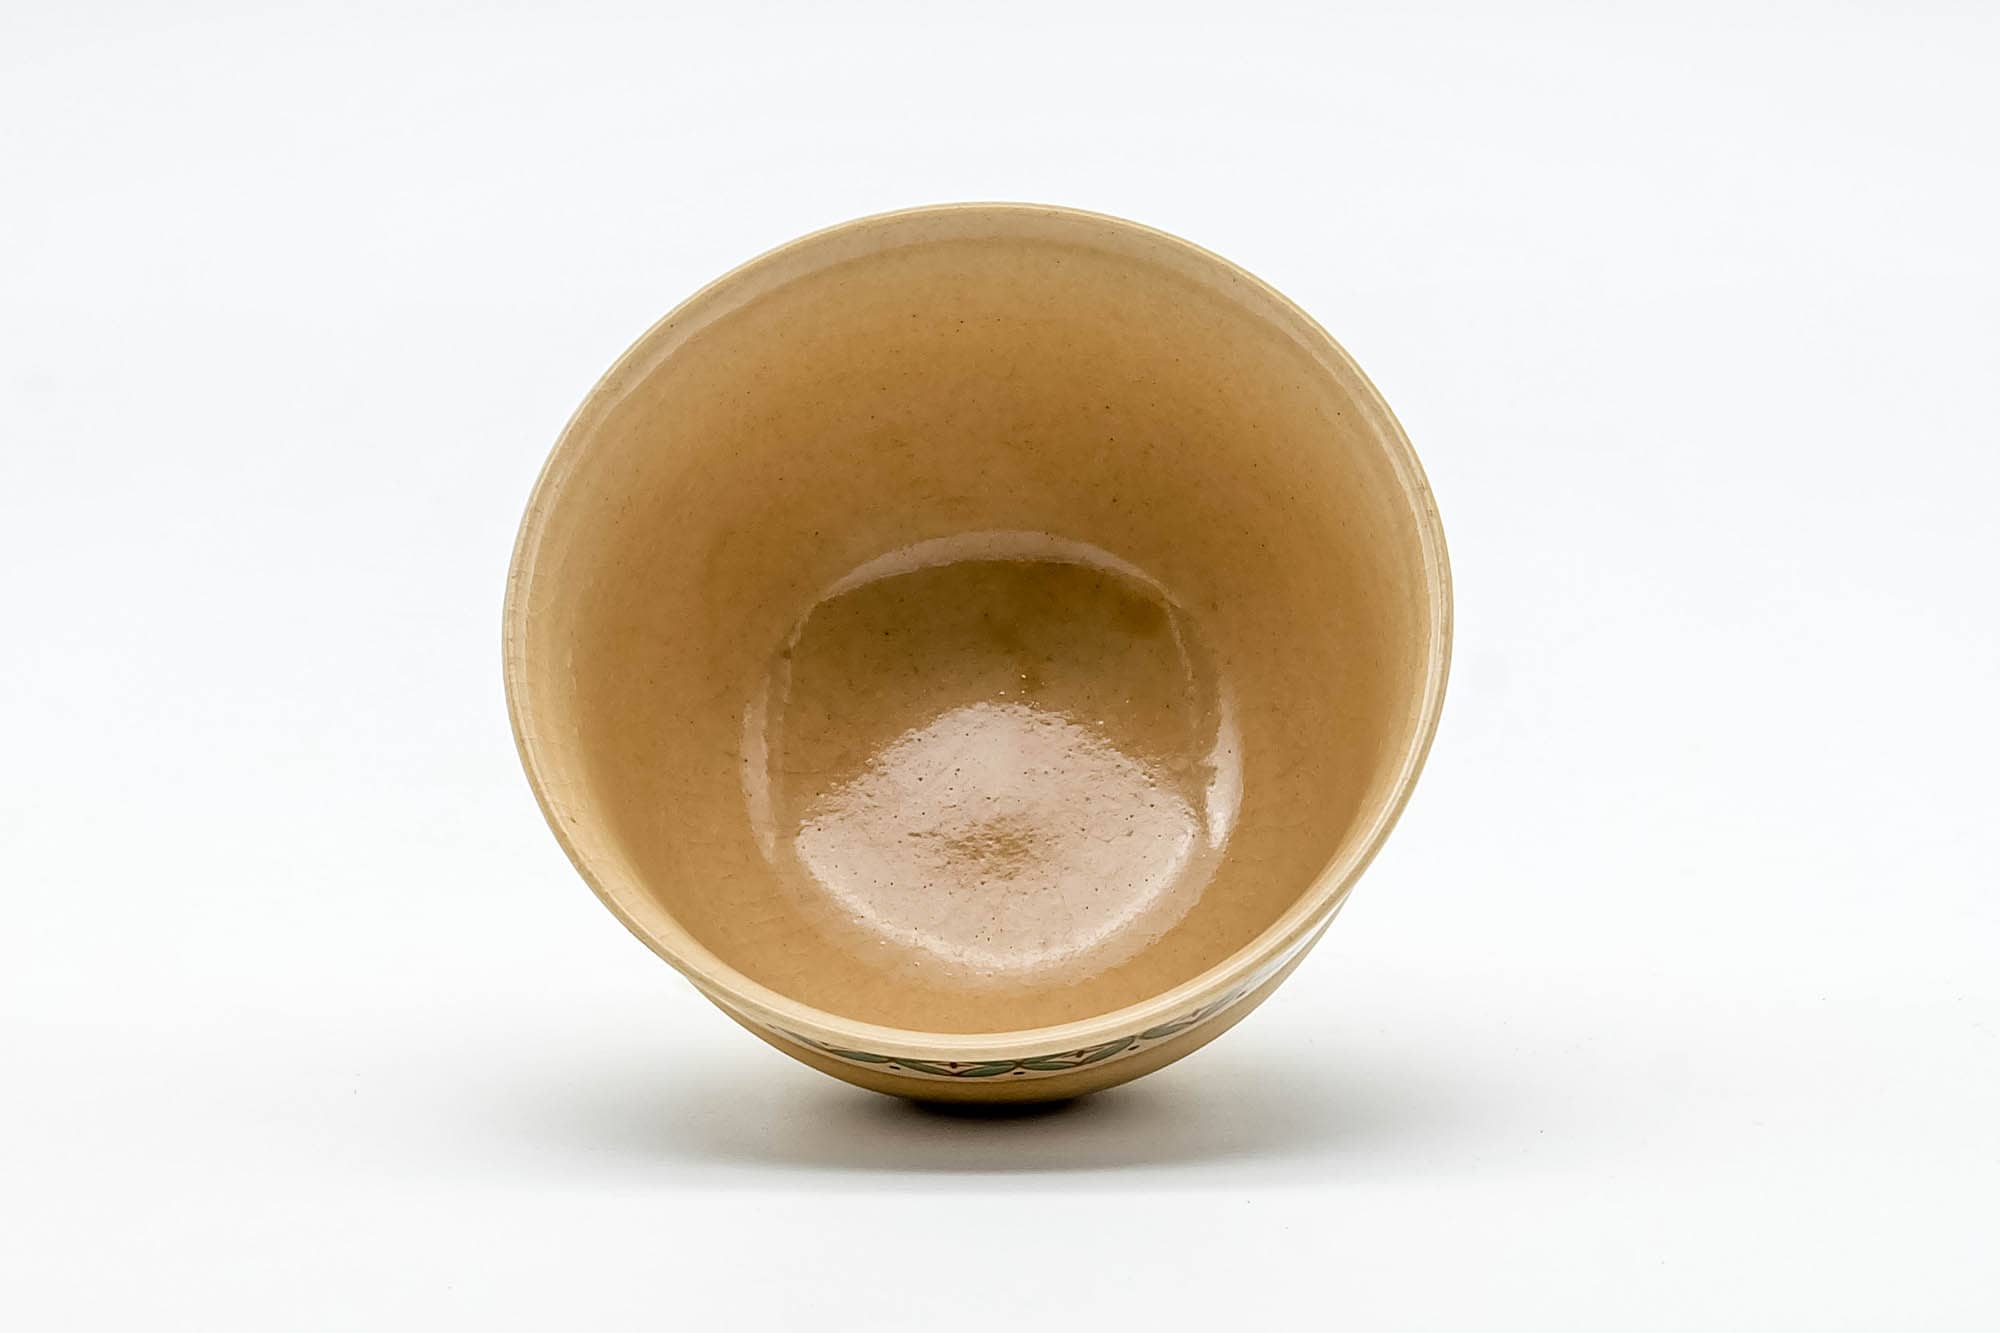 Japanese Teacups - Set of 3 Beige Green Patterned Kiyomizu-yaki Yunomi - 125ml